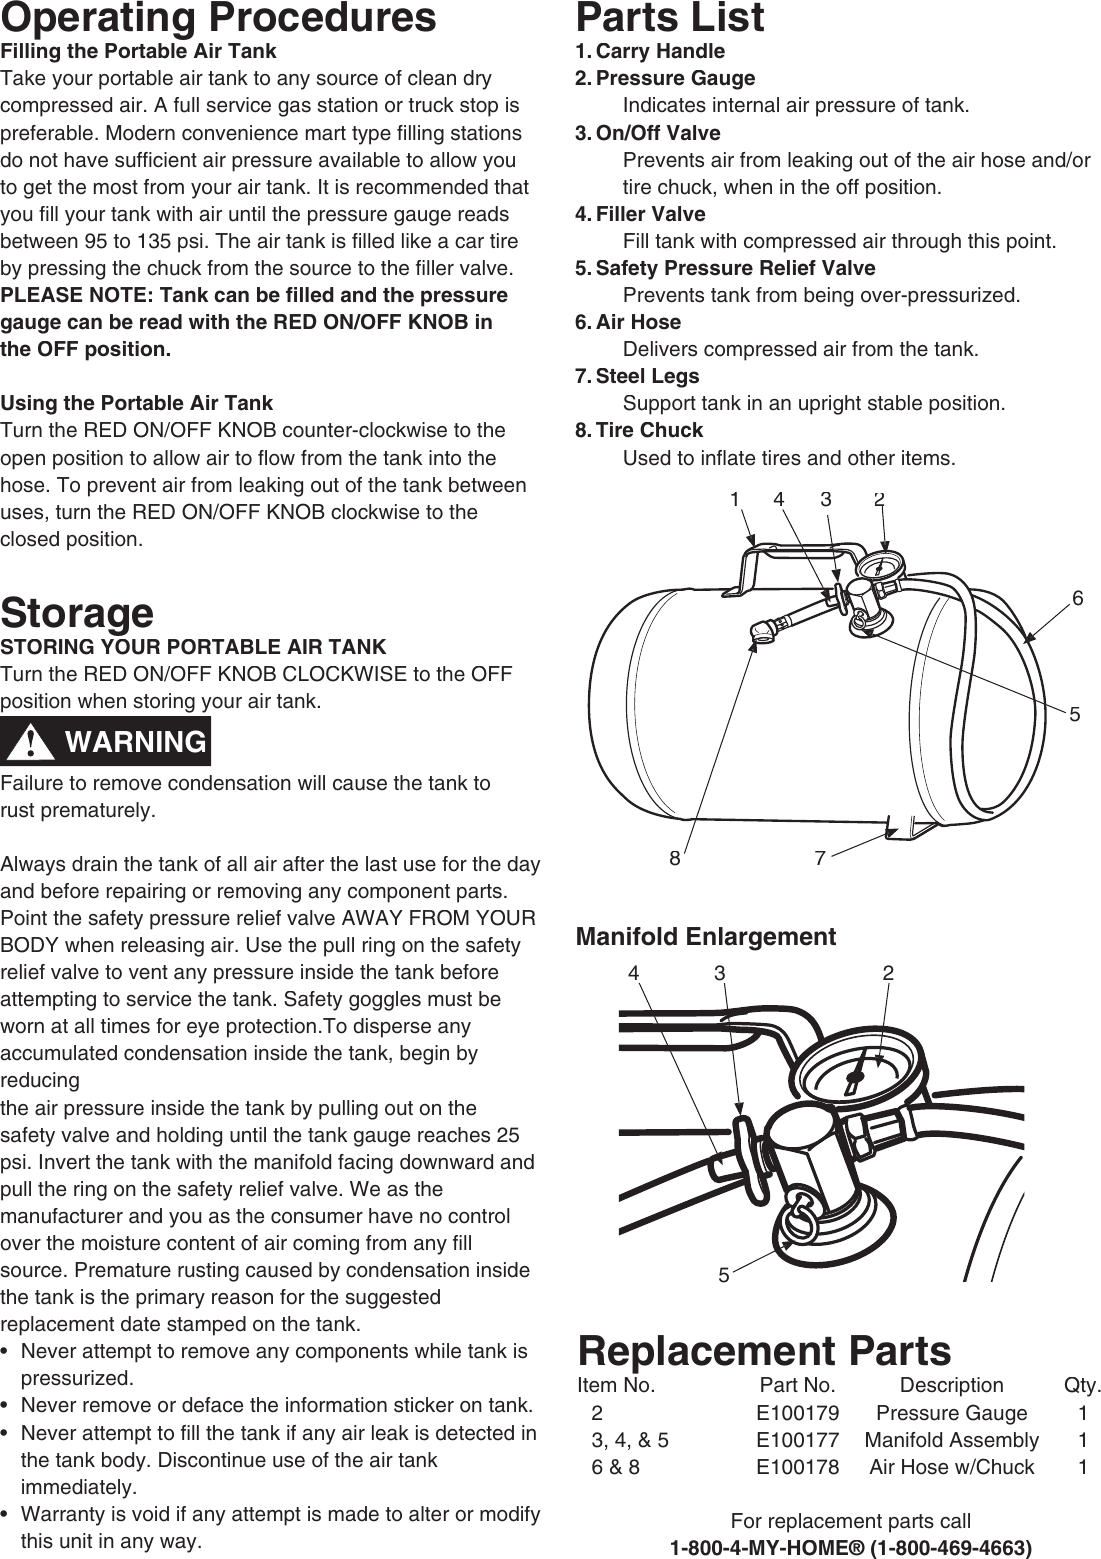 Page 2 of 2 - Craftsman Craftsman-5-Gallon-135-Psi-Horizontal-Air-Tank-Owners-Manual- 15200 Manual  Craftsman-5-gallon-135-psi-horizontal-air-tank-owners-manual